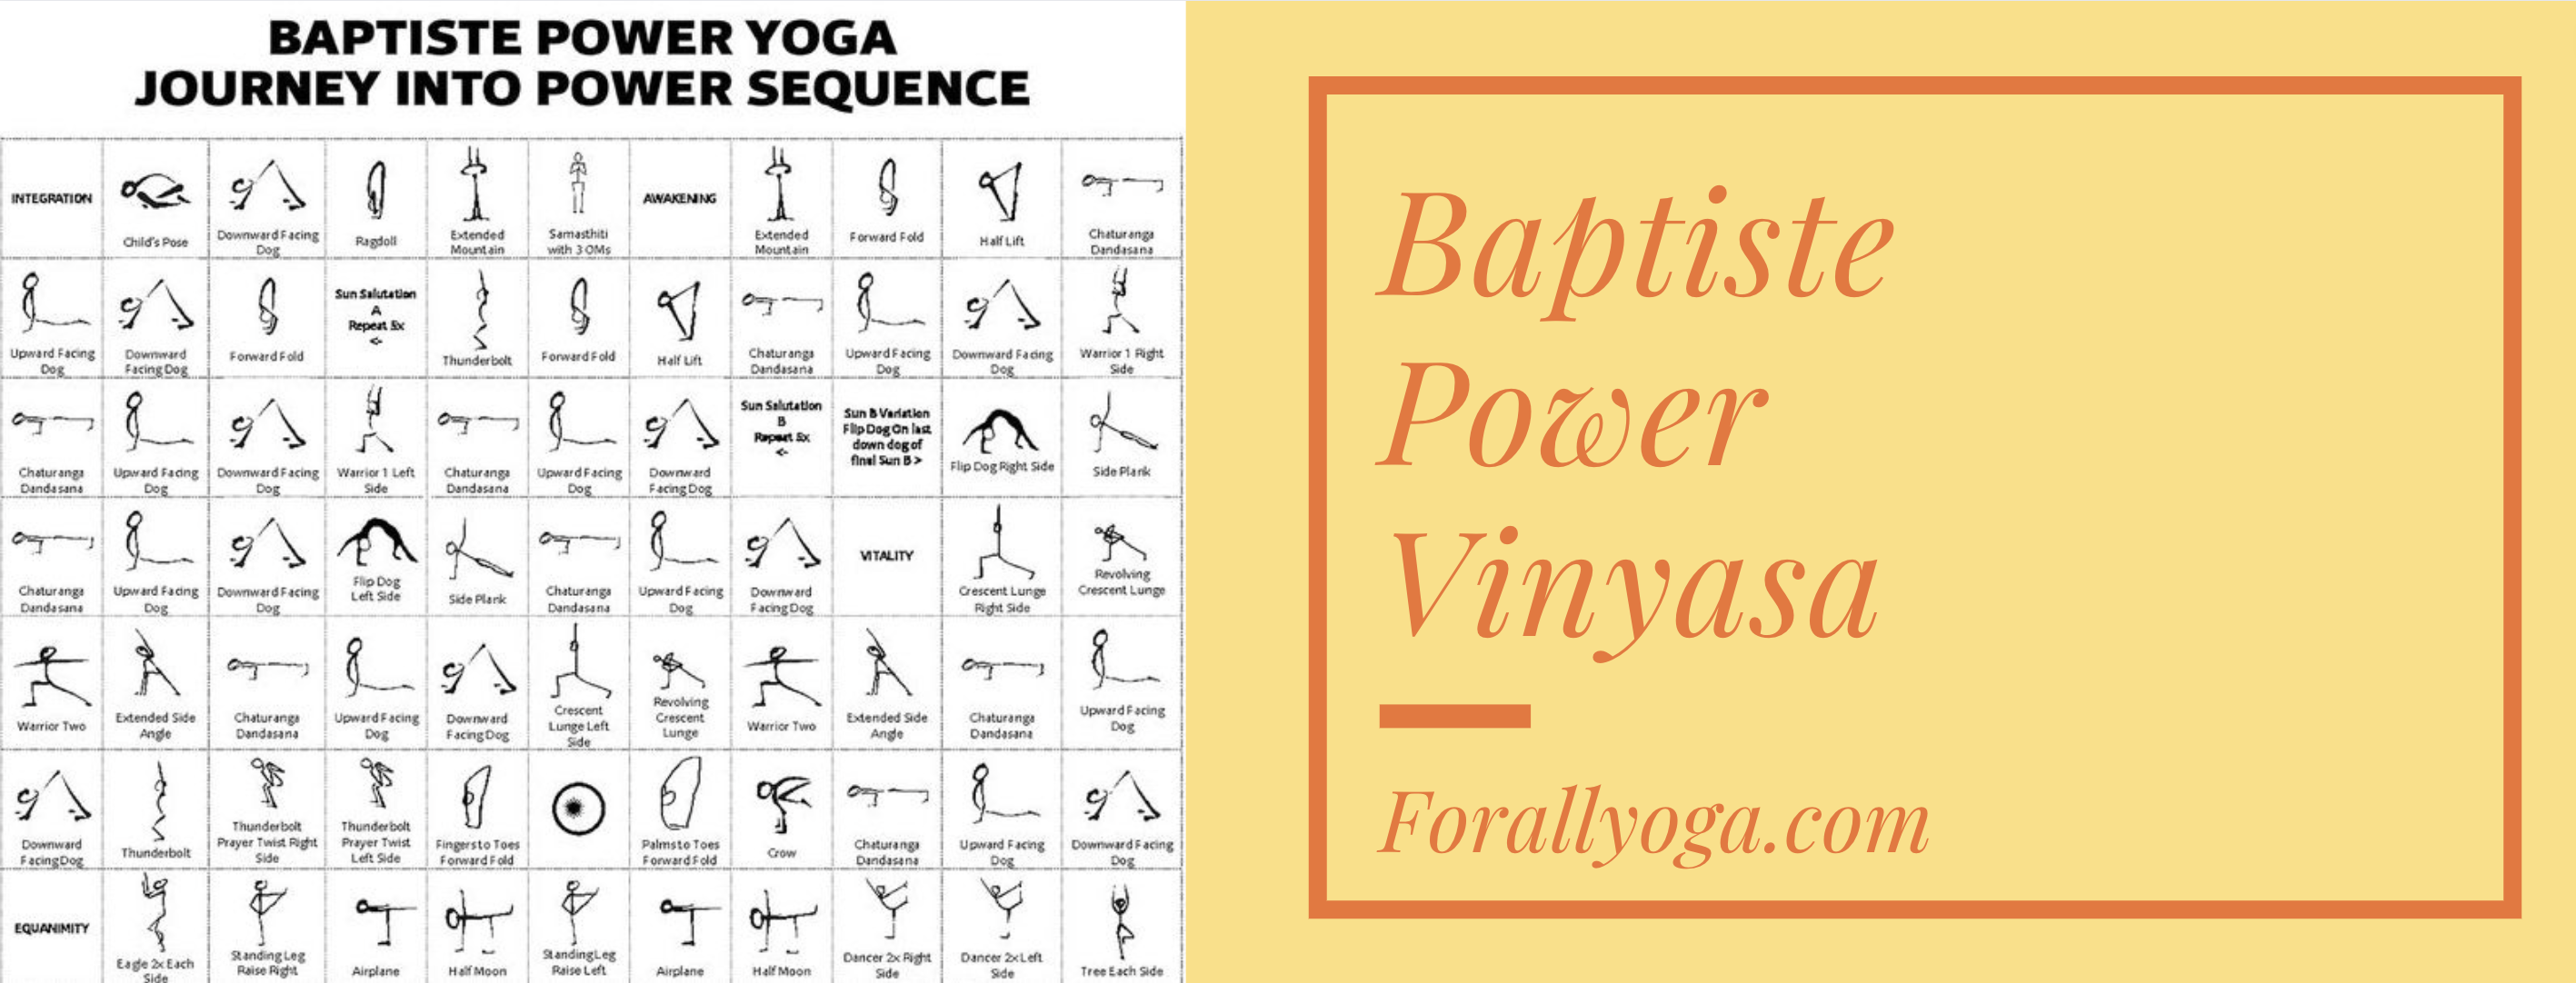 Vinyasa yoga: Types, Benefits, Steps To Do and Tips